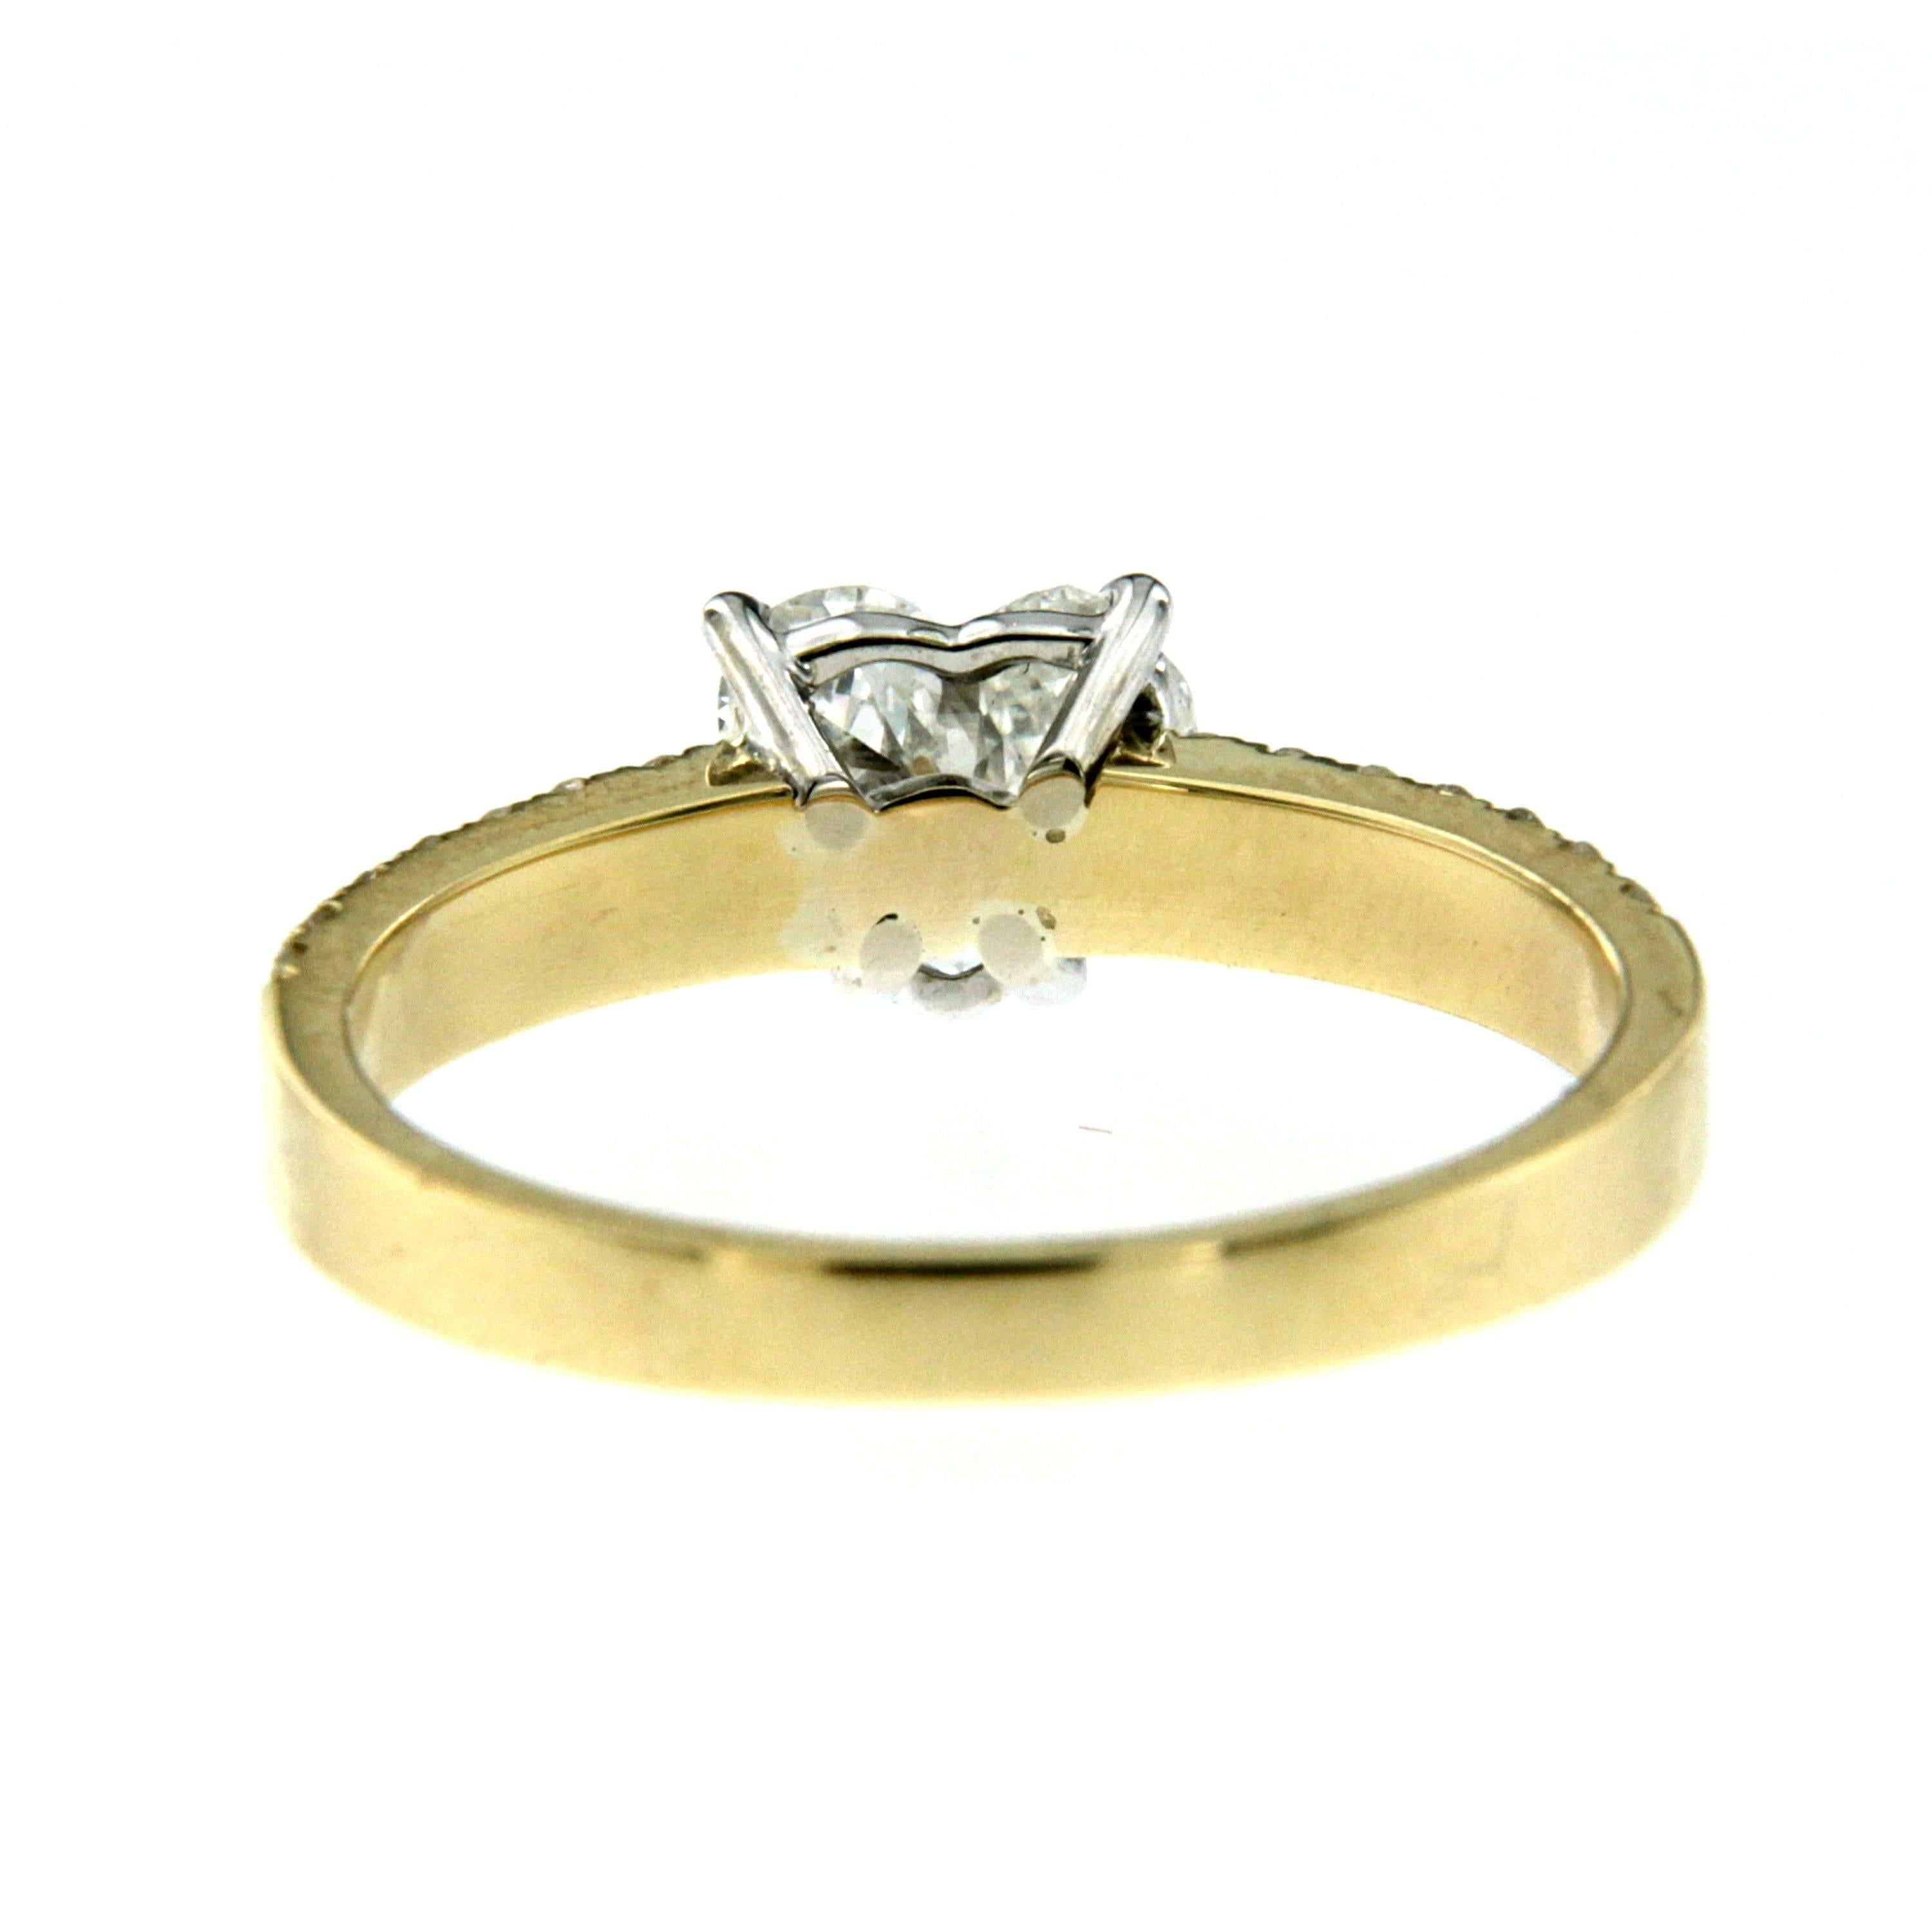 0.70 carat diamond ring on hand